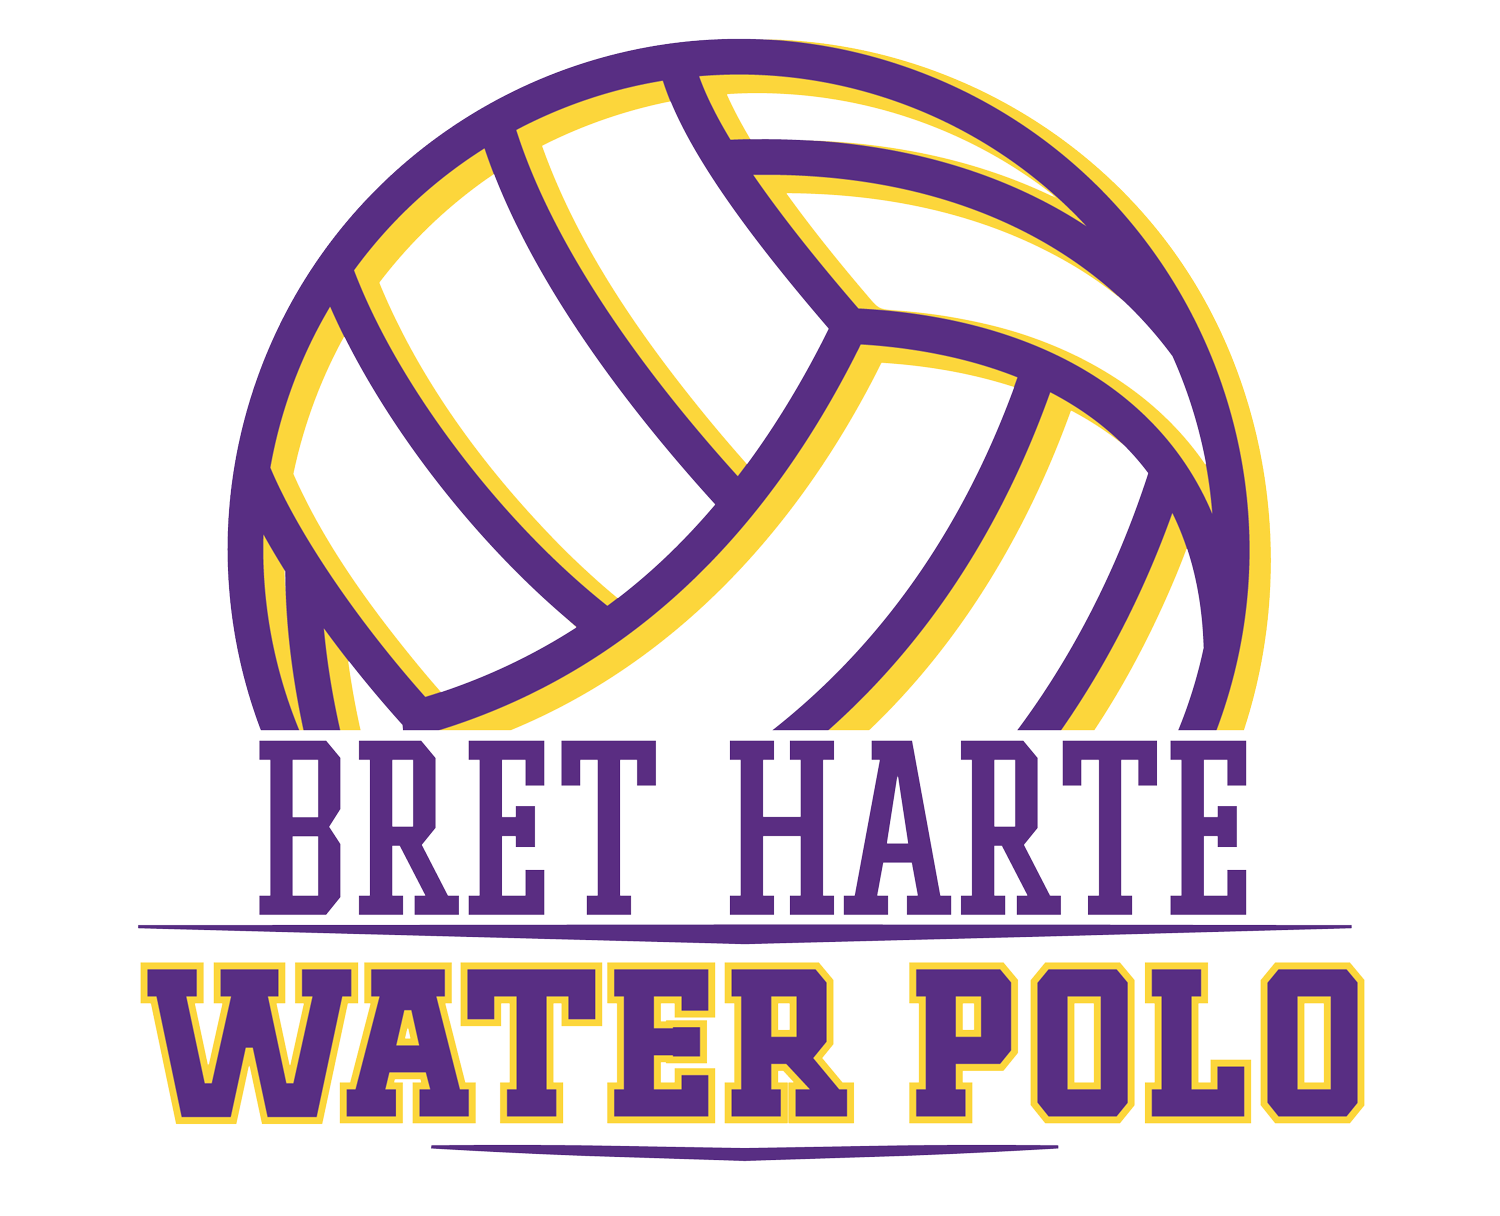 Bret Harte Water Polo logo